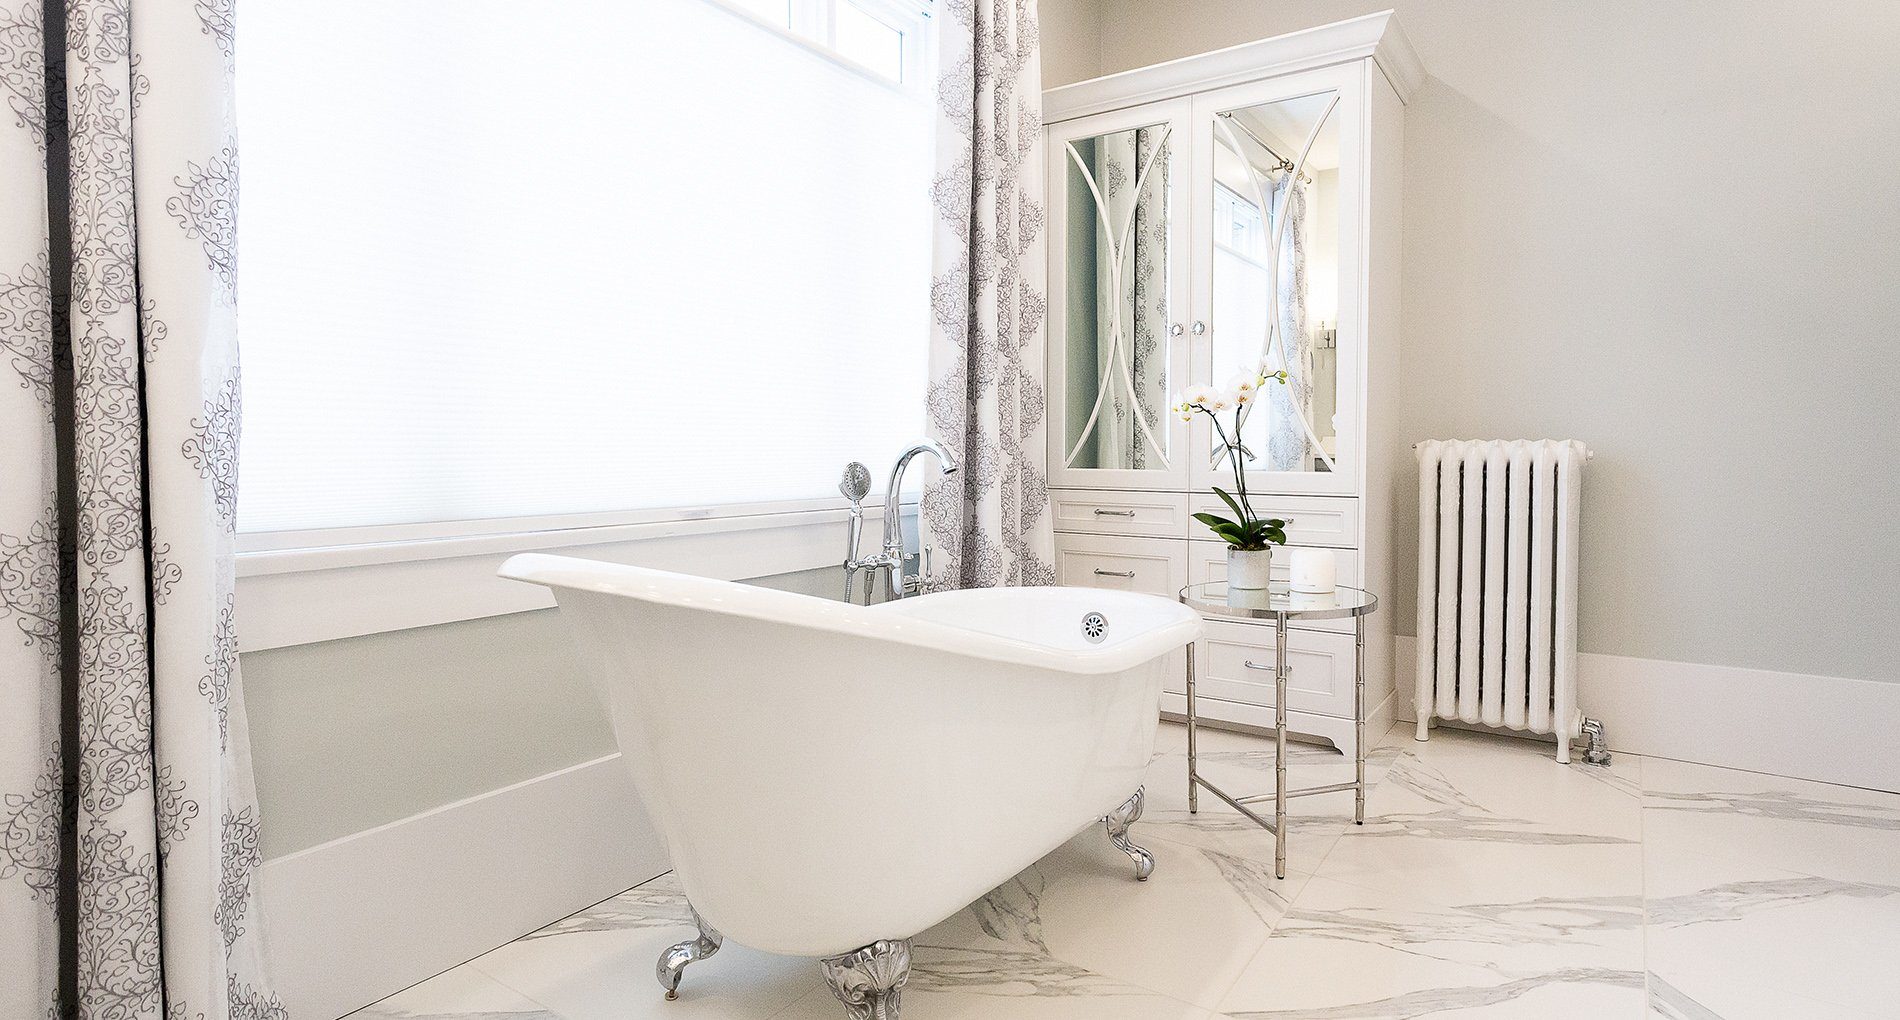 Bathroom Renovations & Design in Delta | Alair Homes Delta